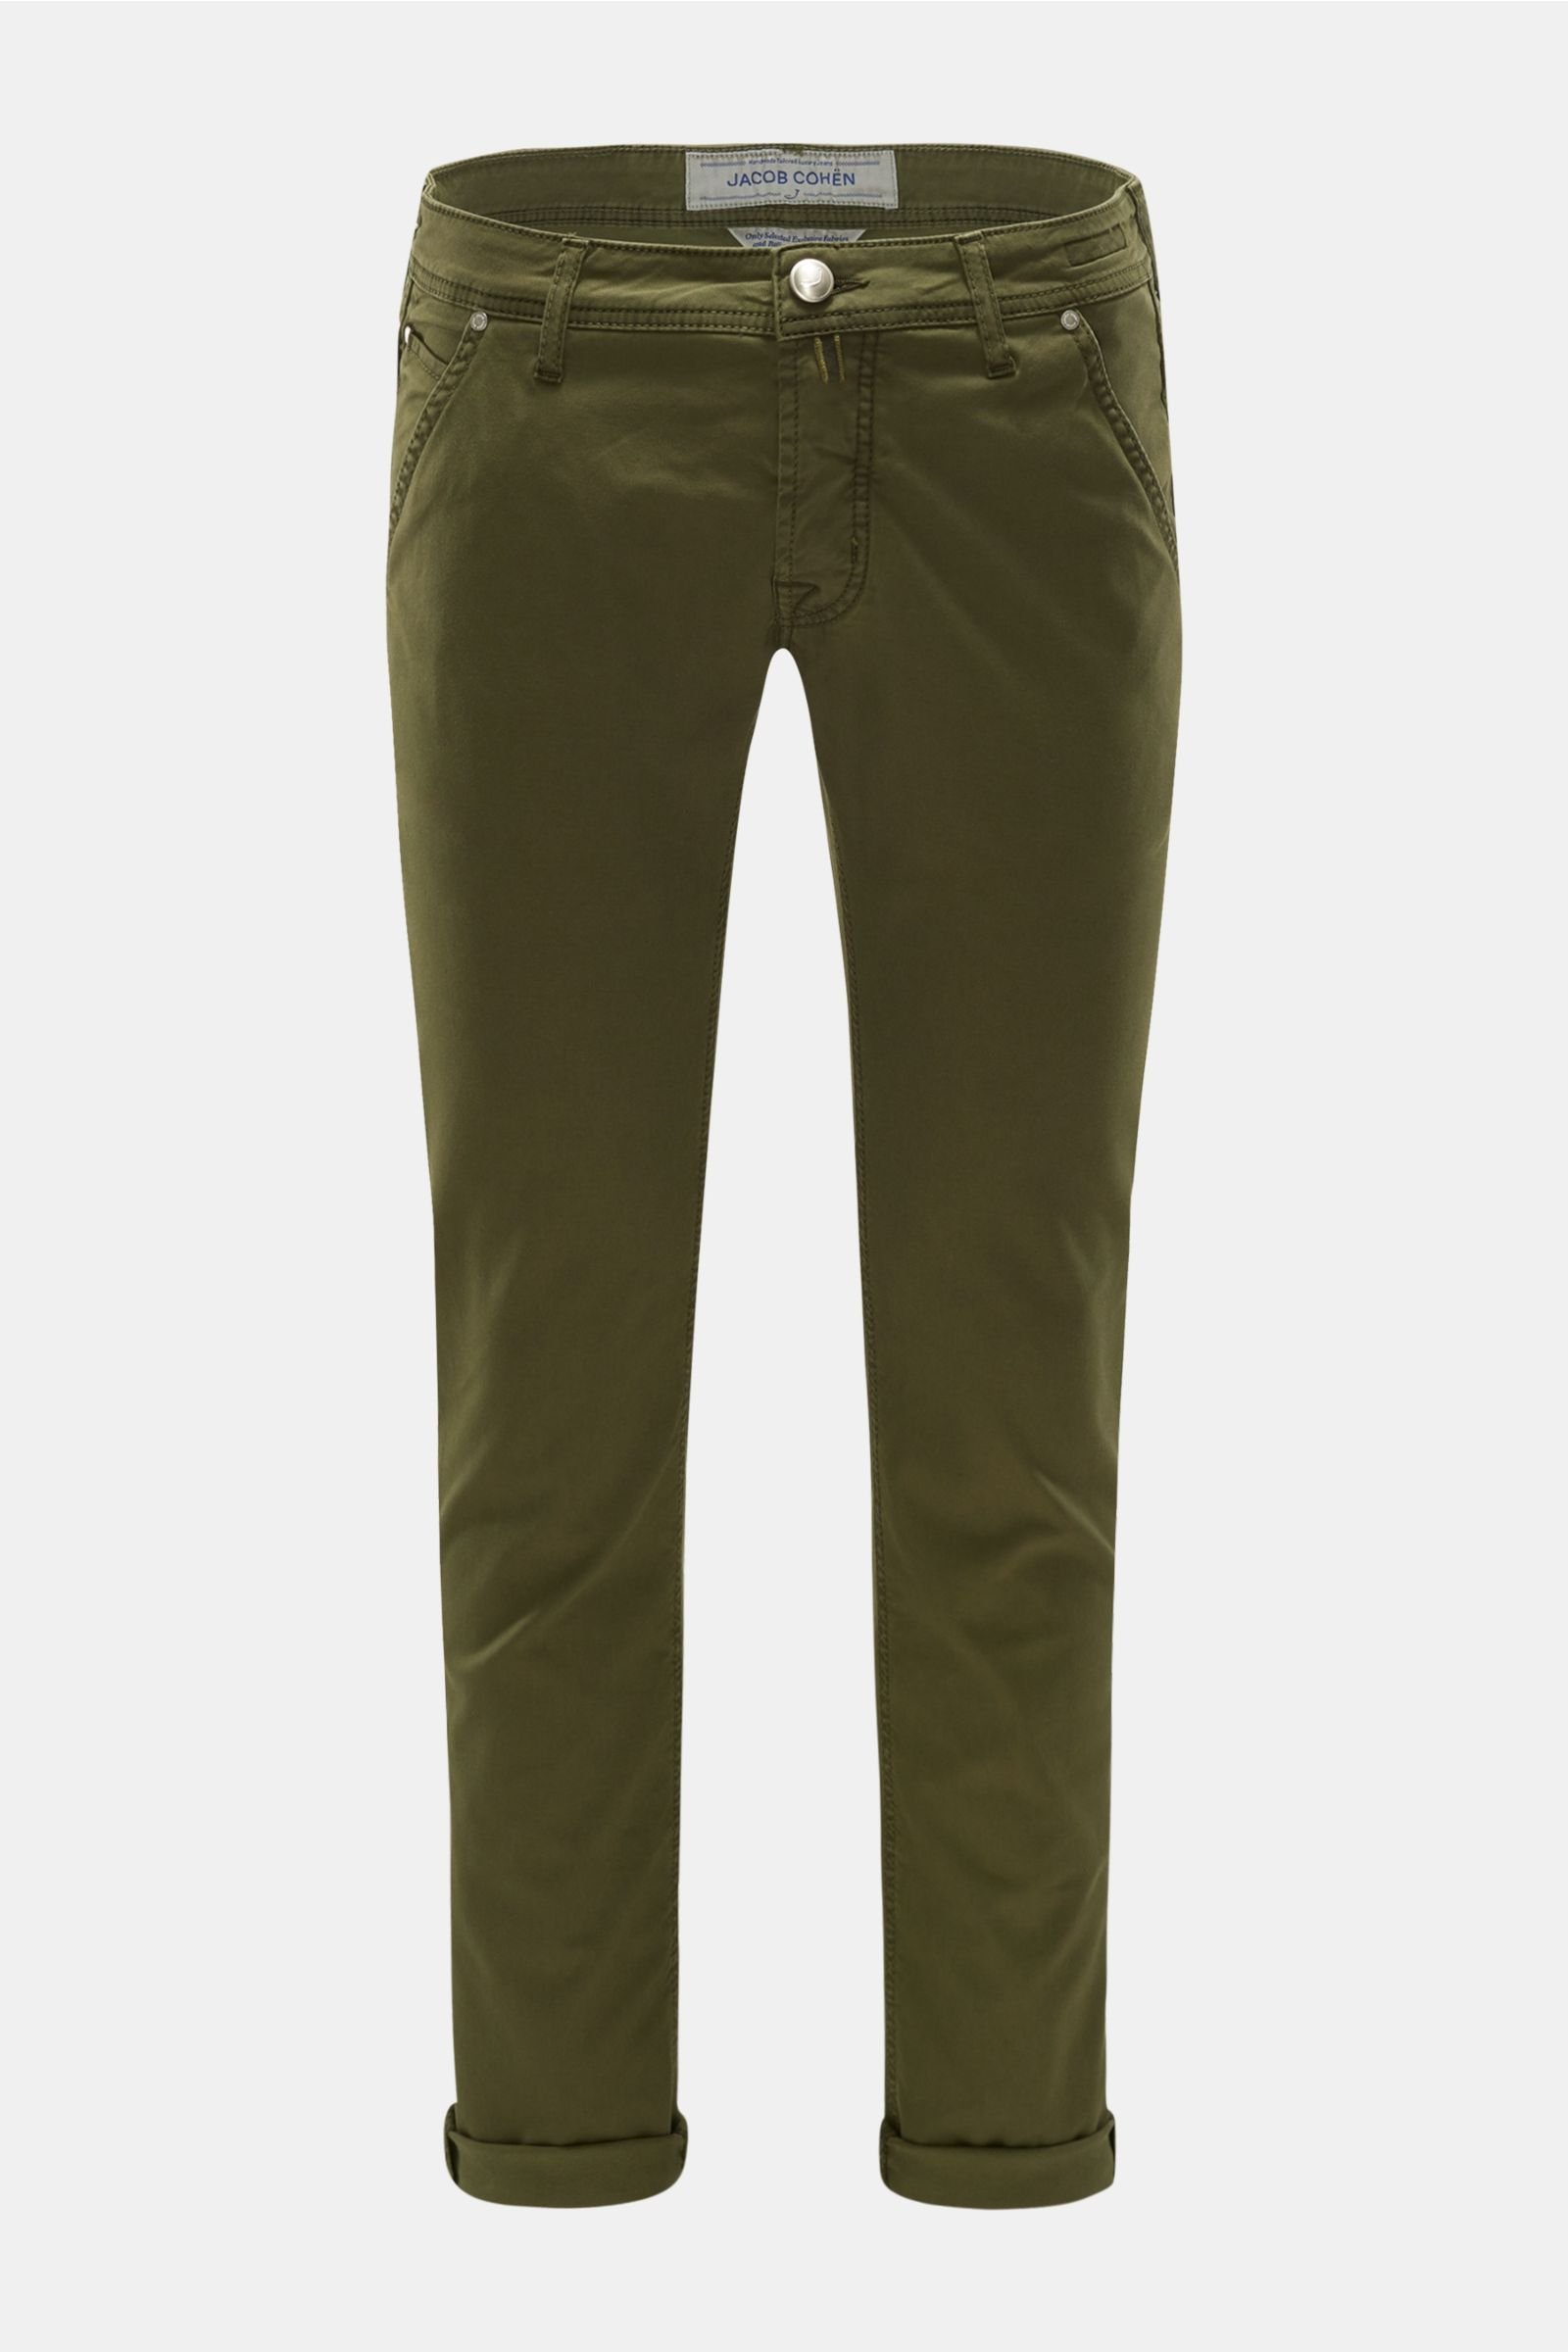 JACOB COHEN trousers 'J613 Comfort Slim Fit' olive | BRAUN Hamburg